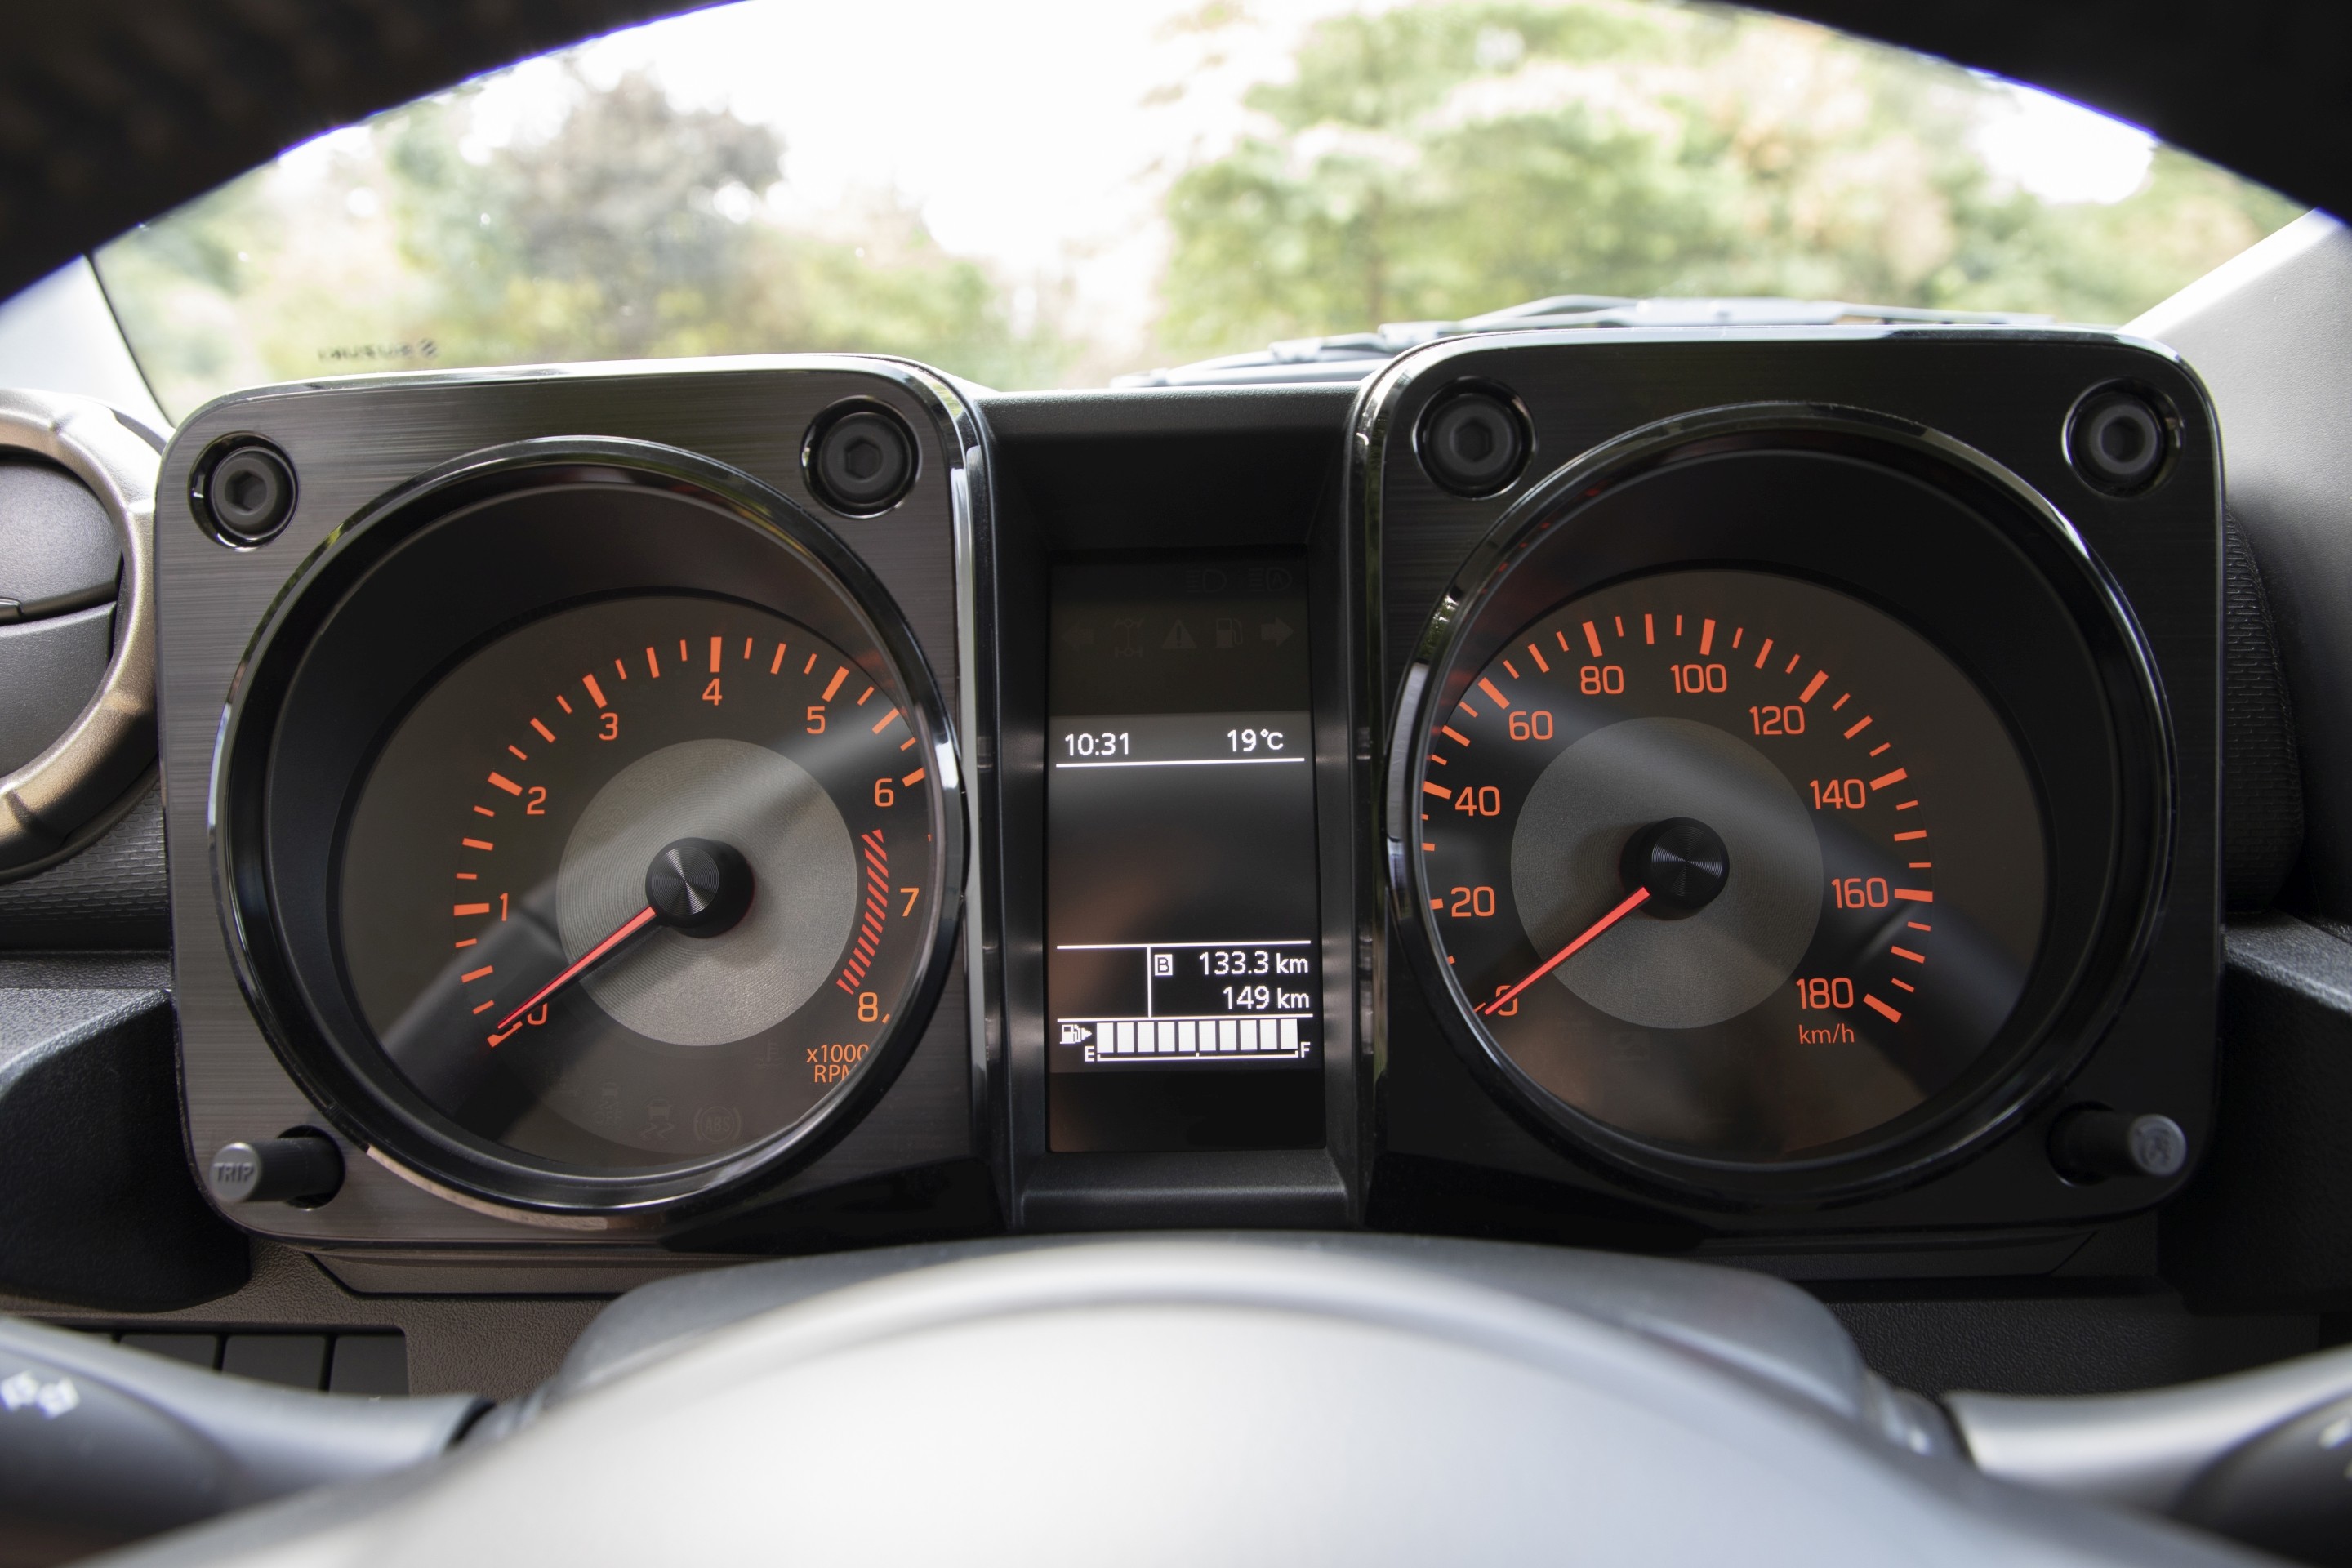 2019 Suzuki Jimny Review Testdrive Autoevolution